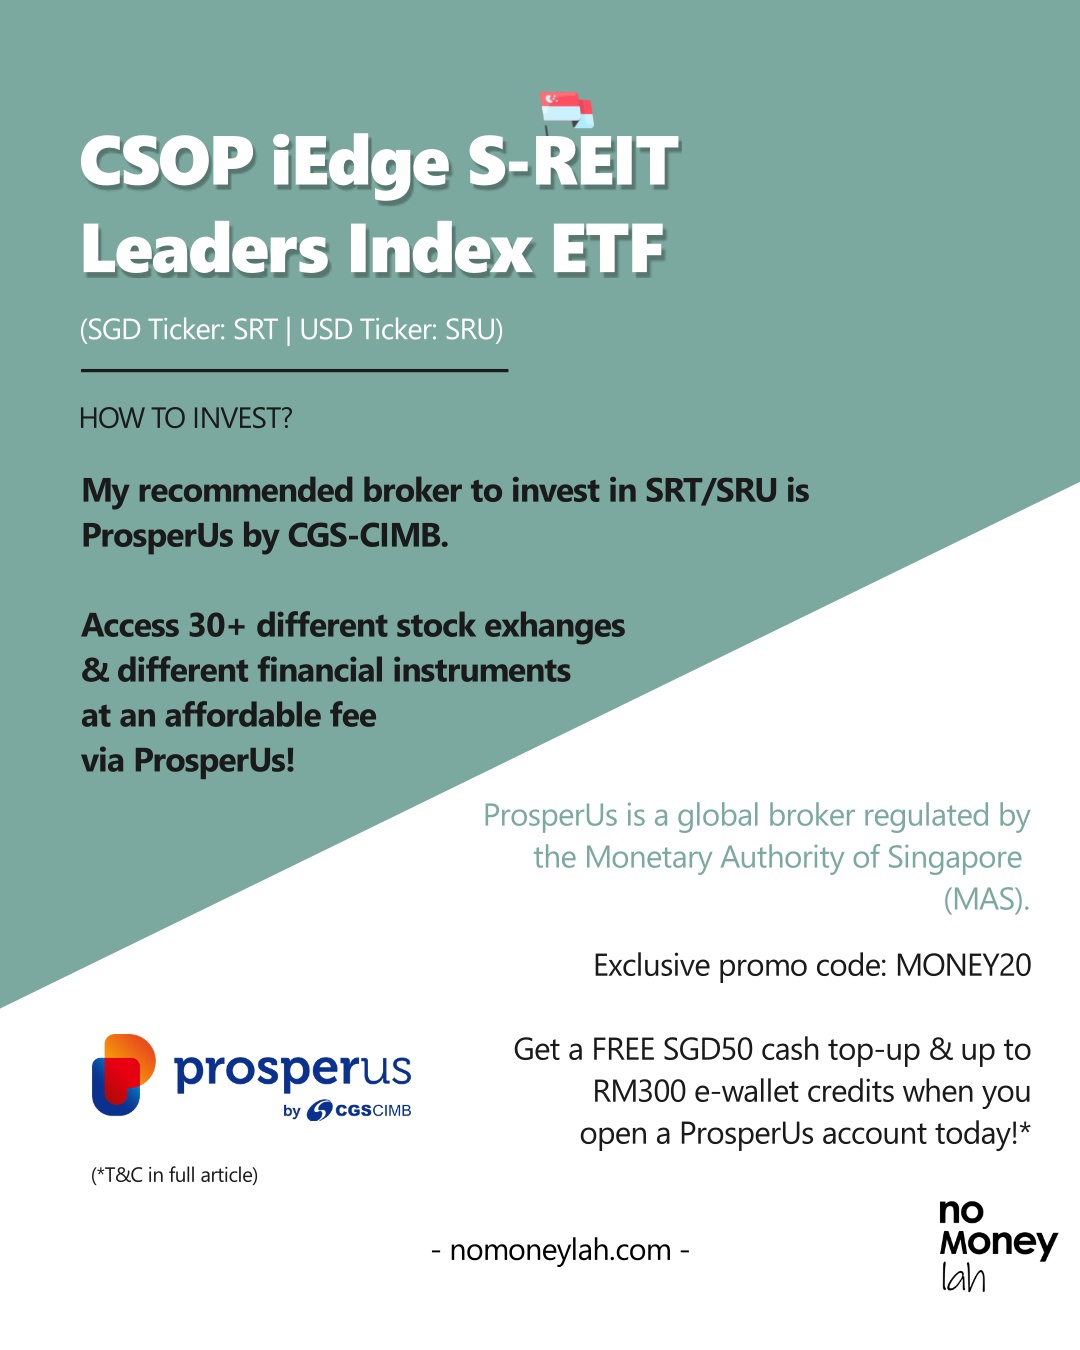 Use ProsperUs by CGS-CIMB to invest in SRT/SRU!